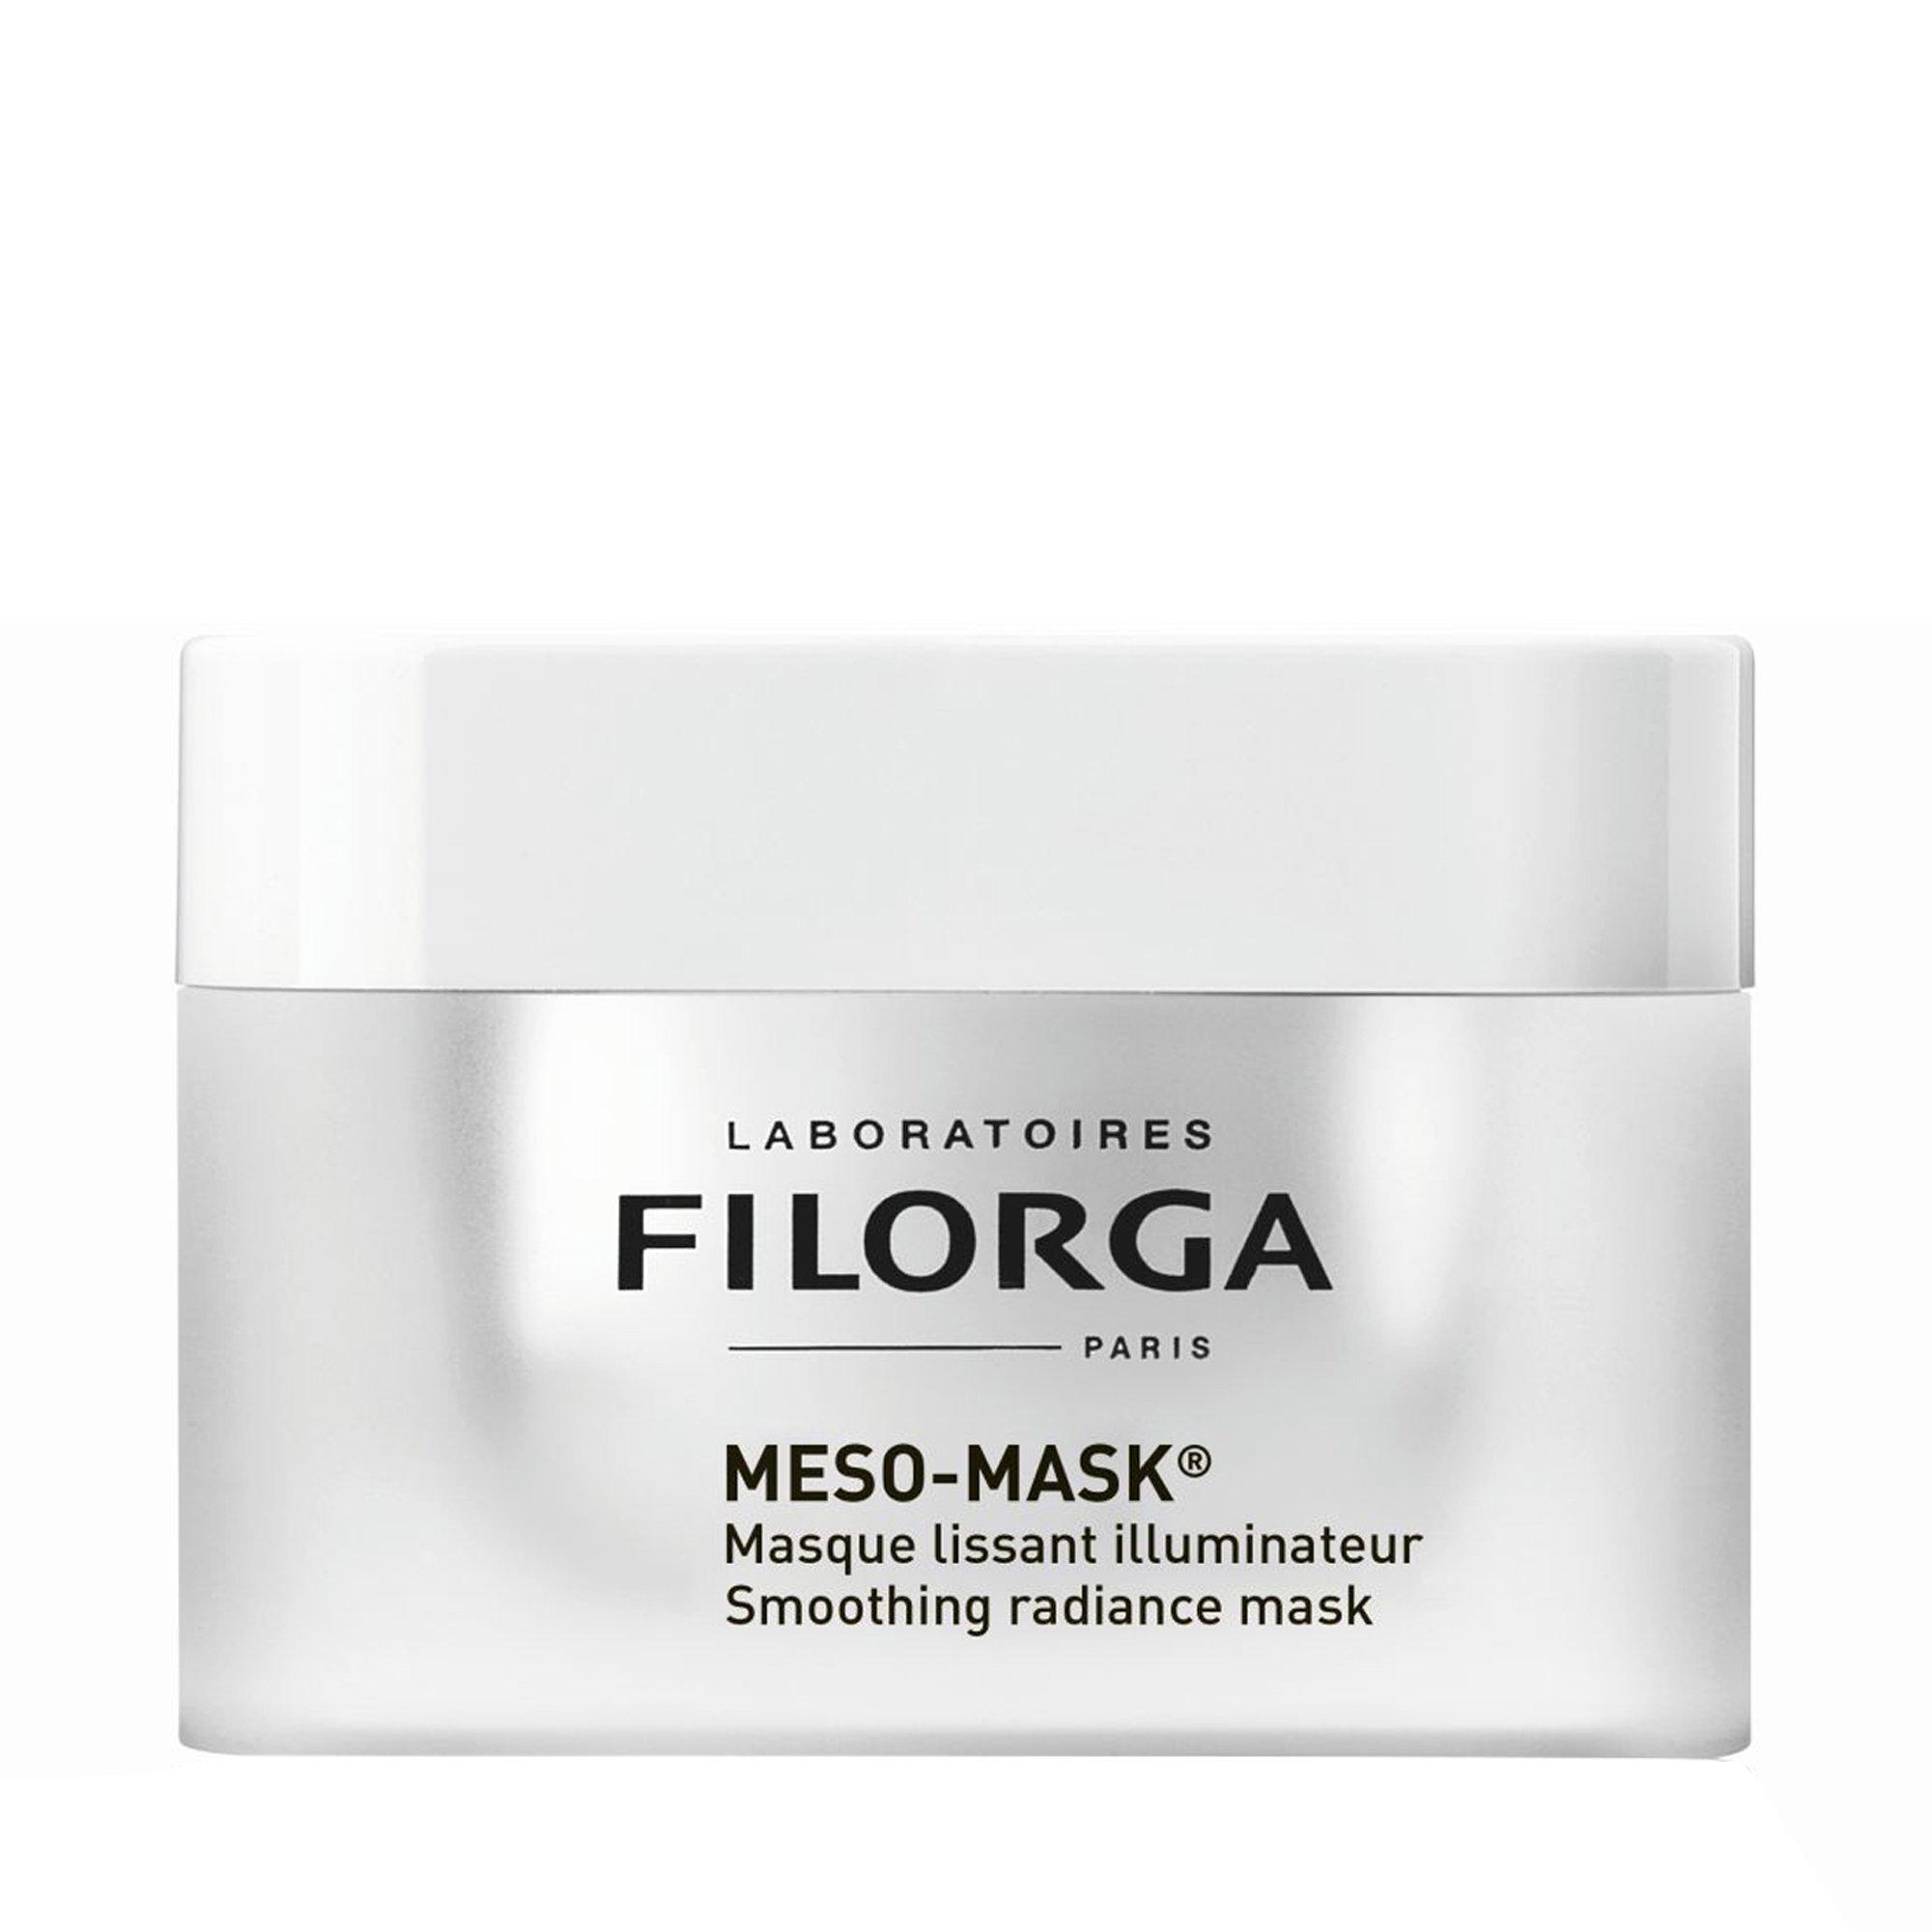 FILORGA Meso-Mask Masque lissant illuminateur